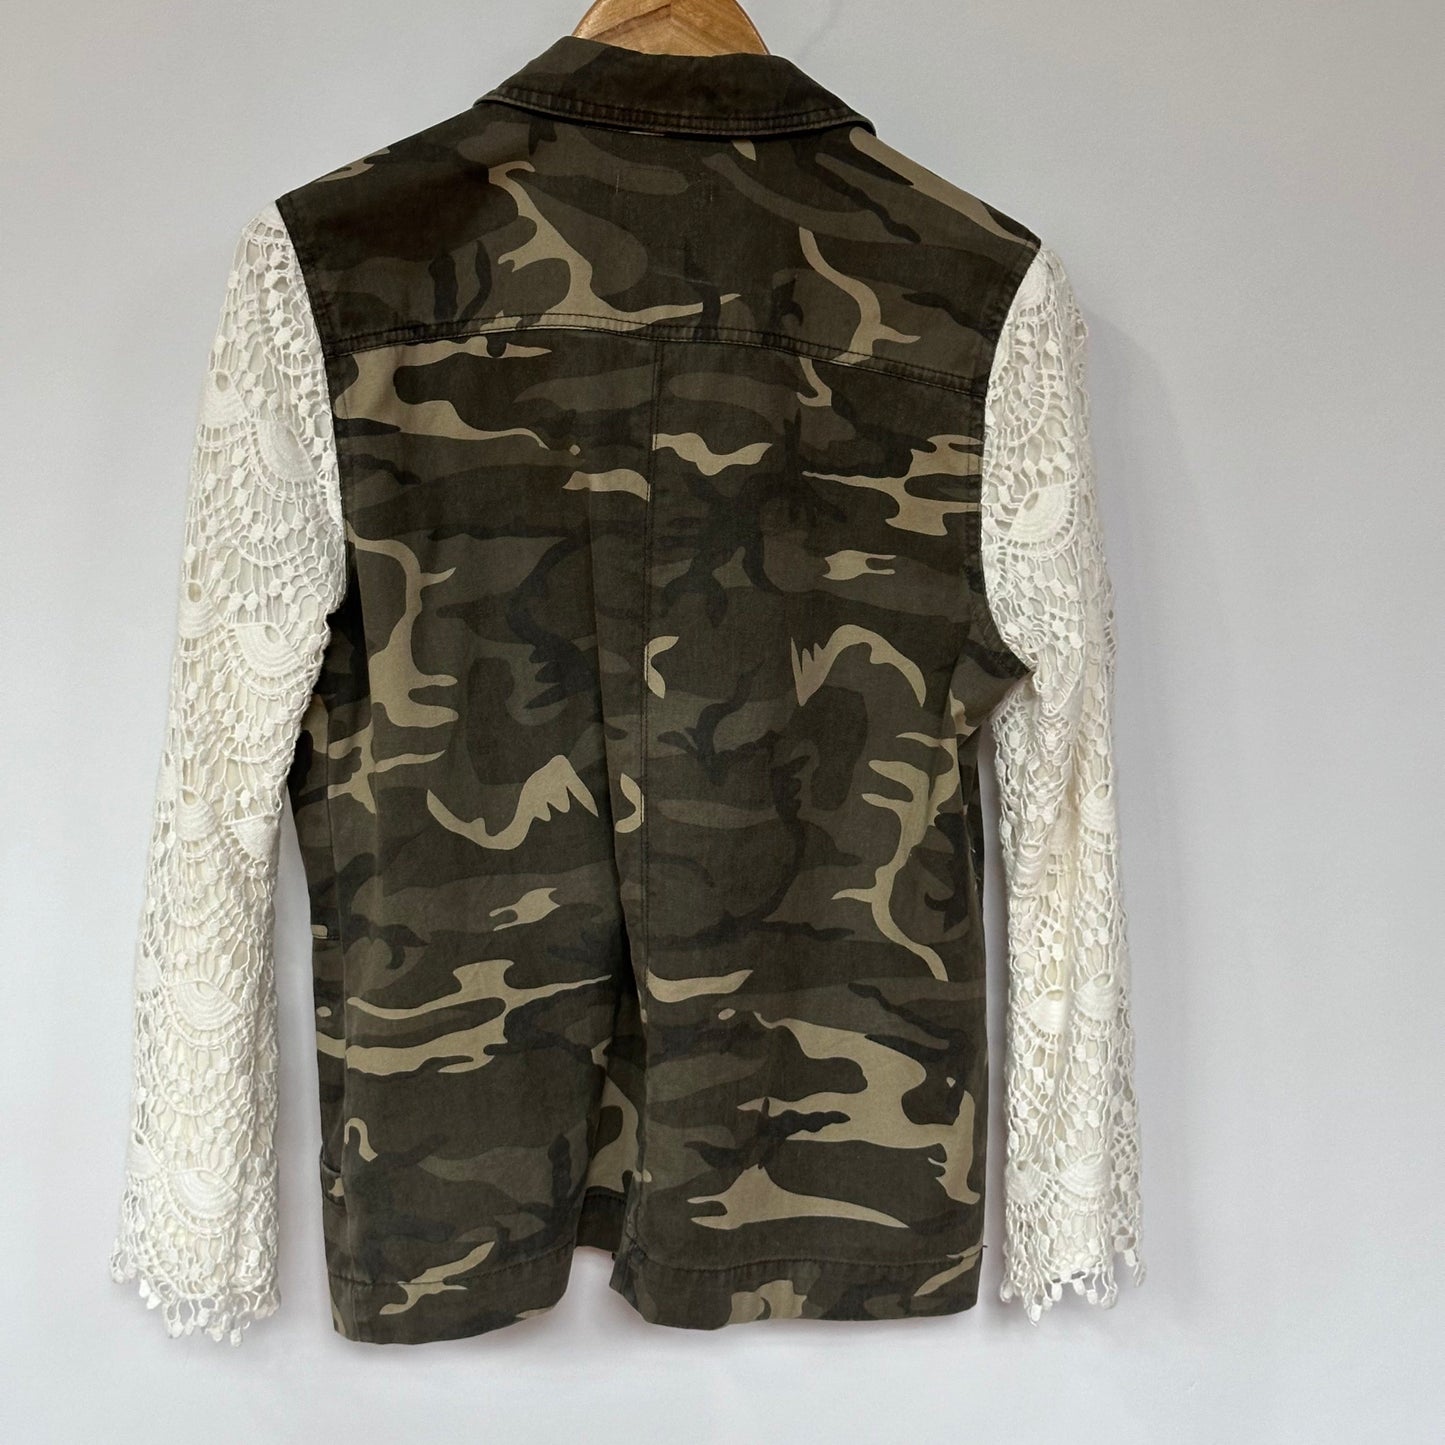 ivory lace + camo denim trench style jacket